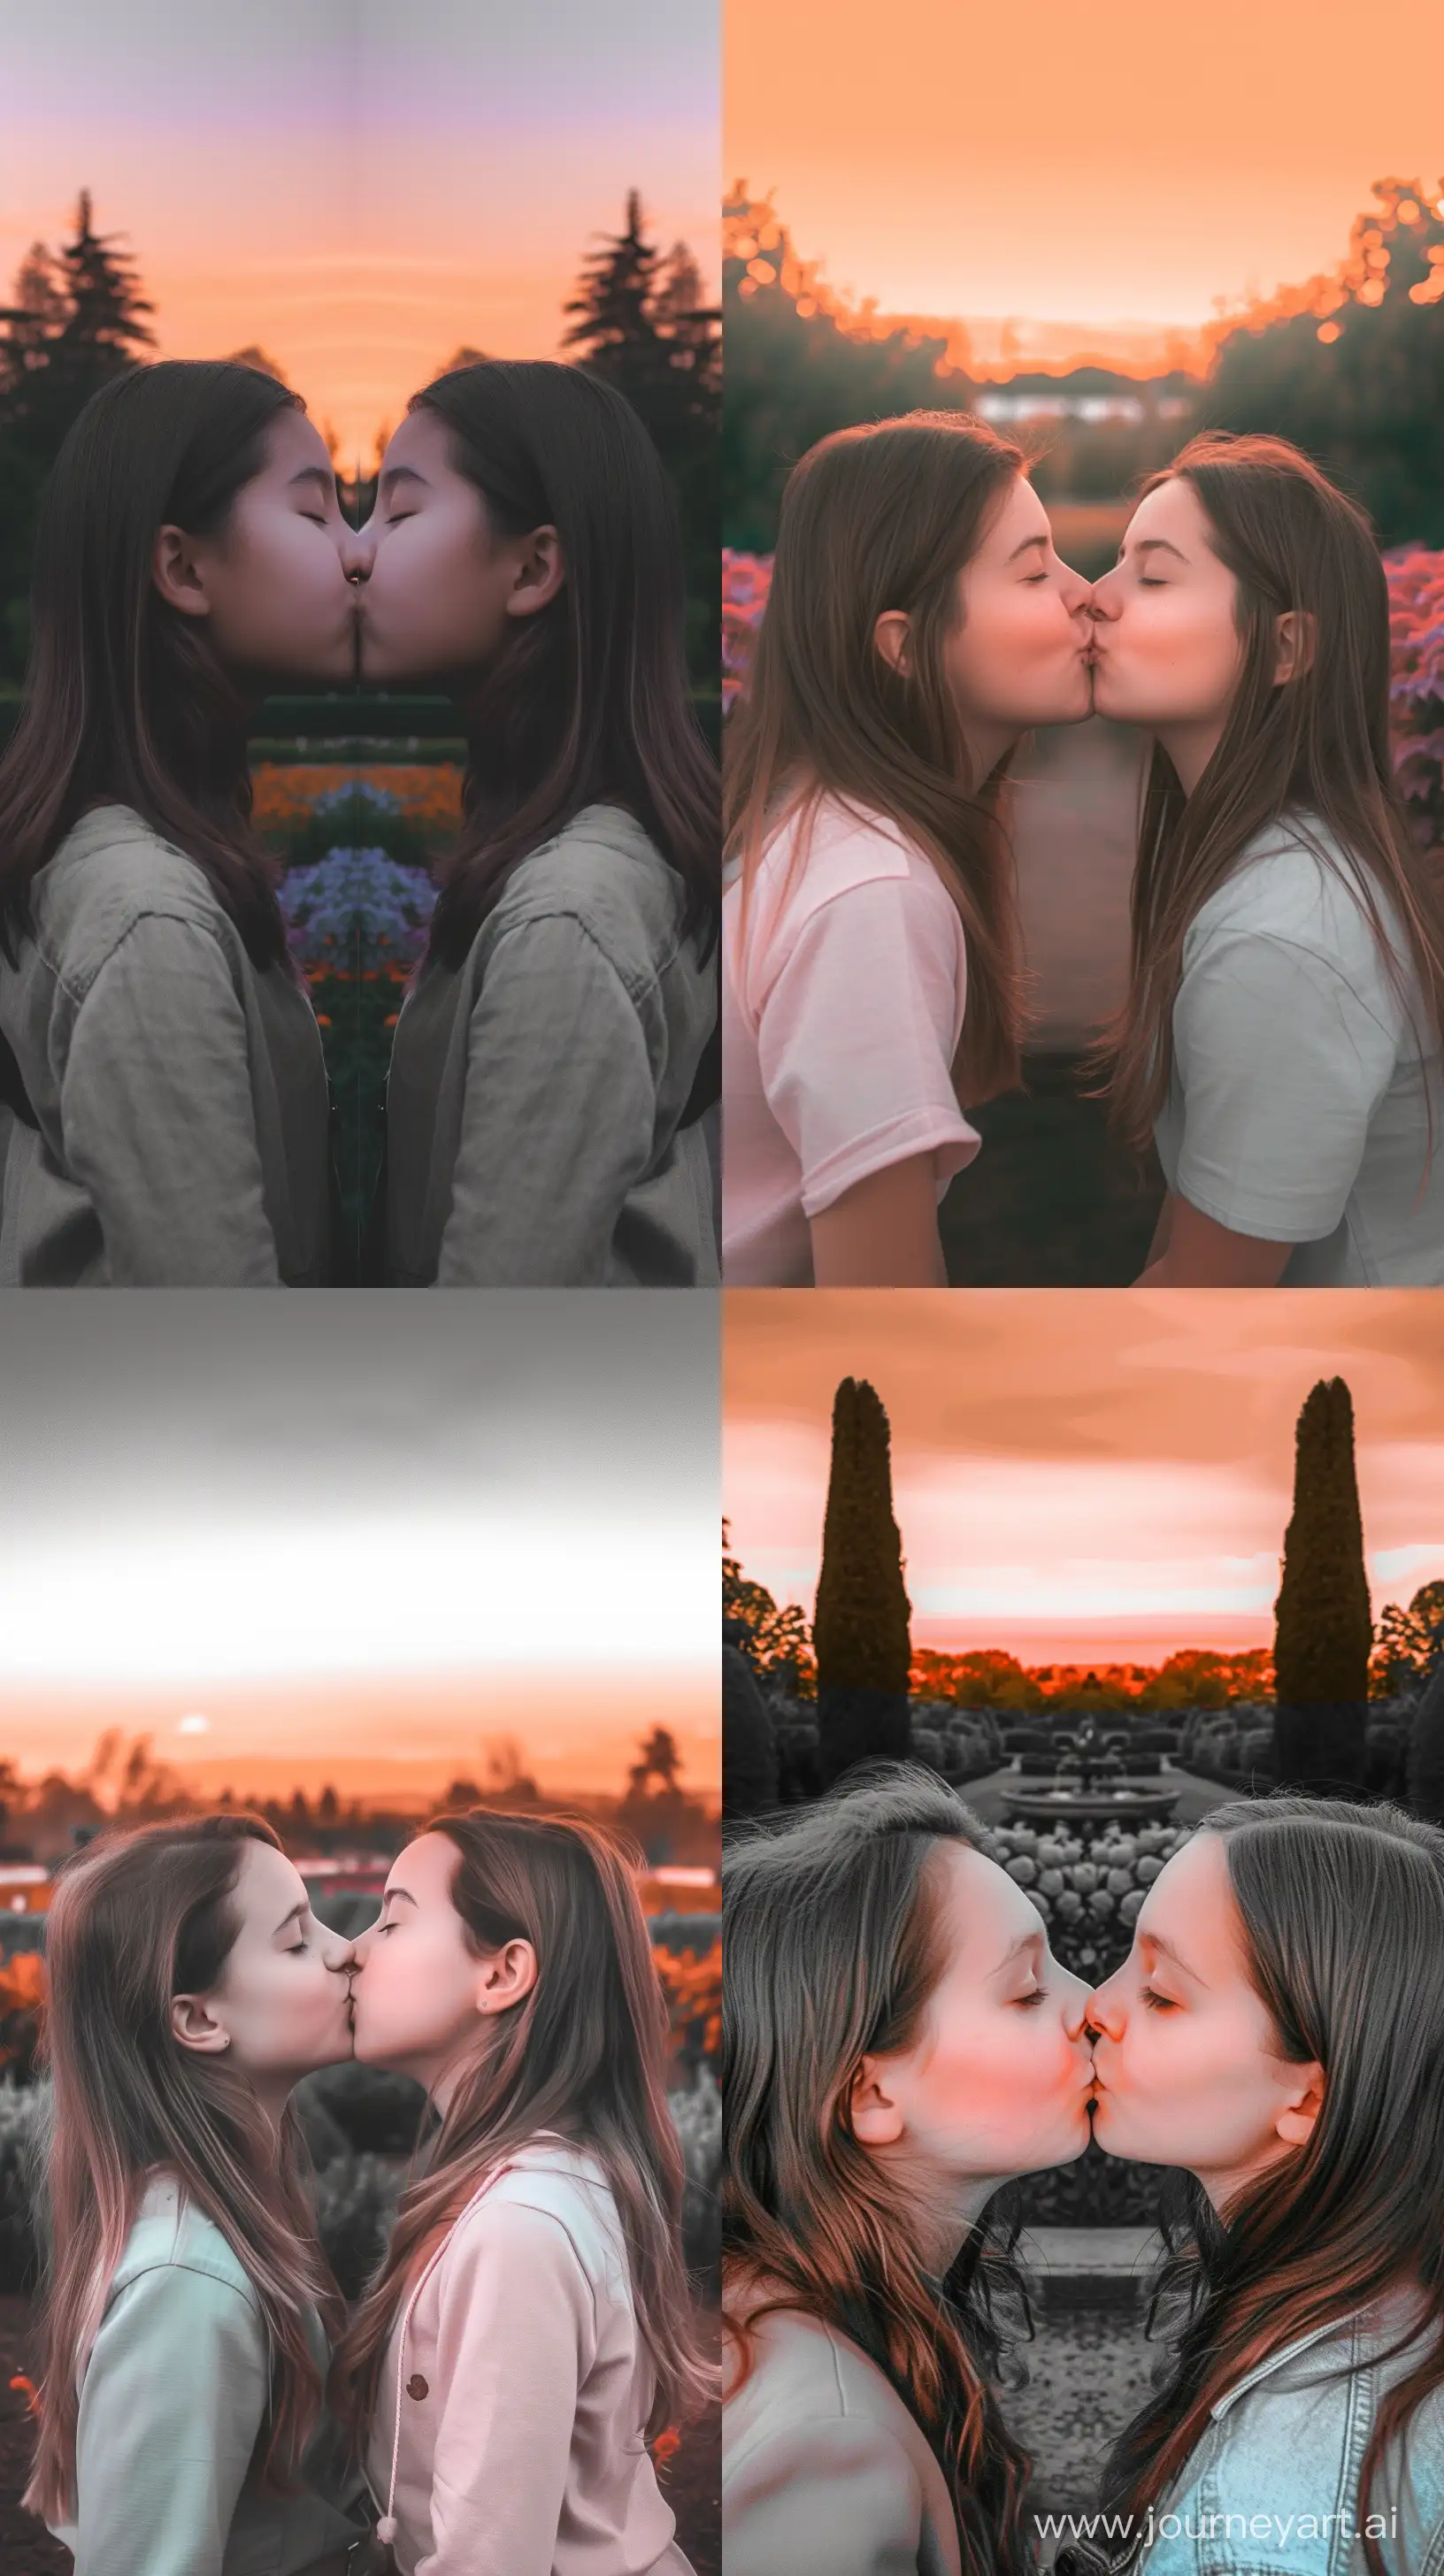 Sunset-Garden-Kiss-Harmonized-Soft-Colors-in-Dynamic-VHS-Effect